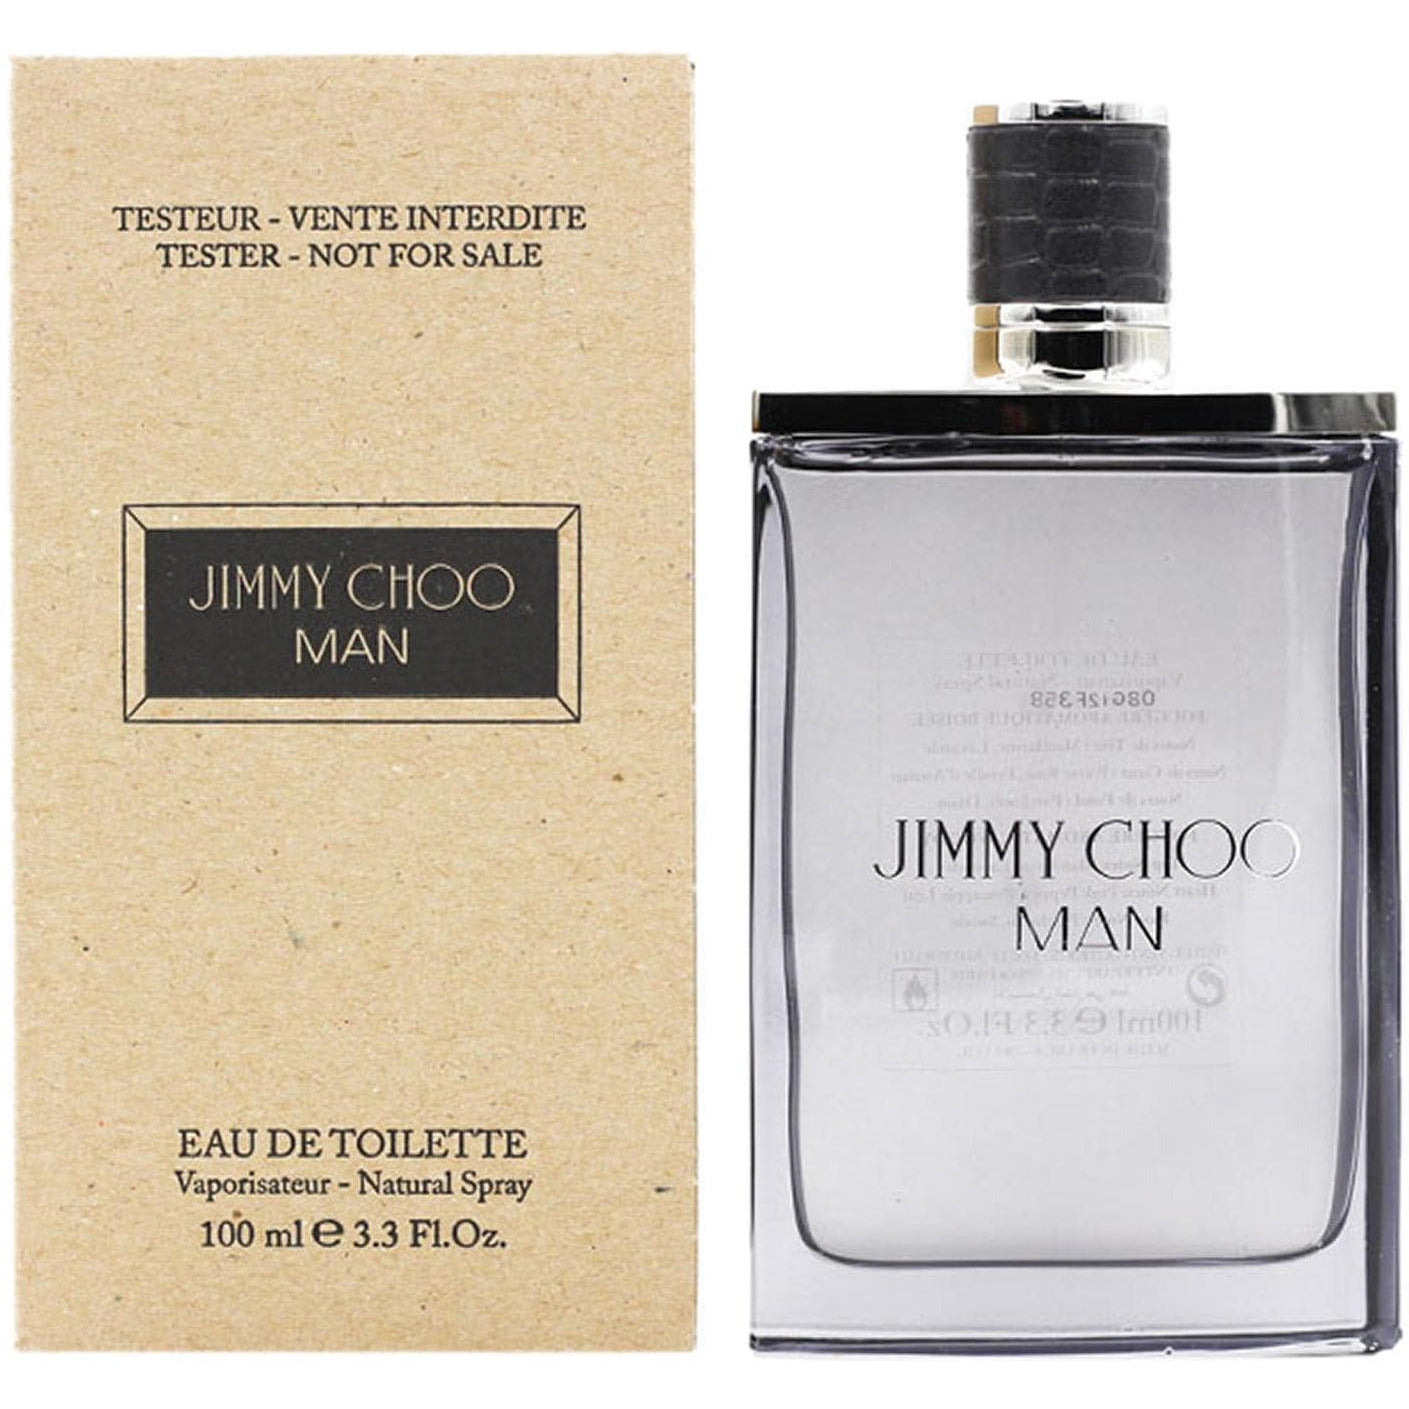 jimmy-choo-man-tester-perfume